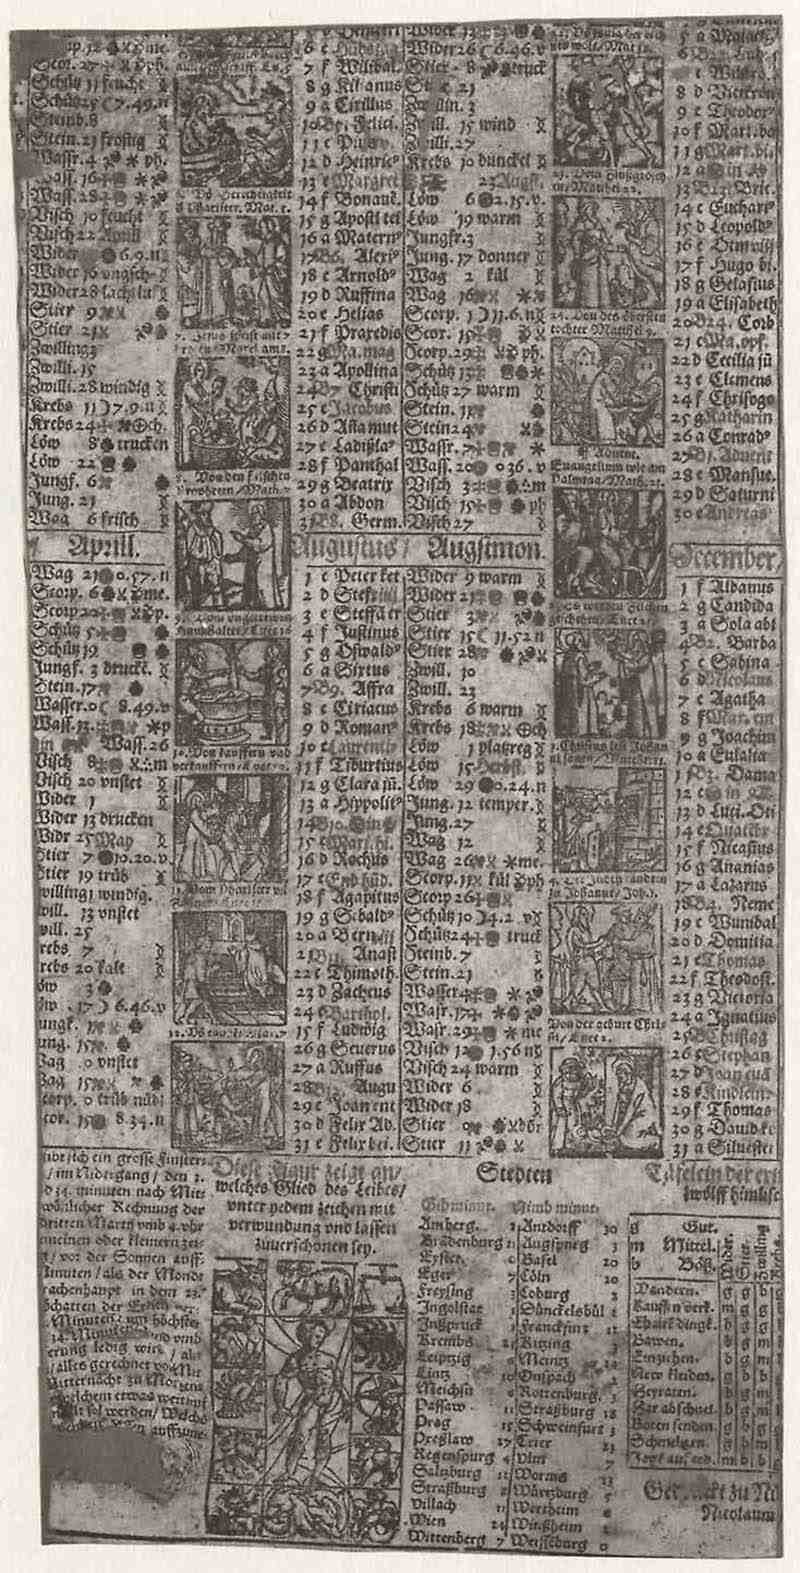 Calendar of year 1569, Part B. Nicolaus Knorr